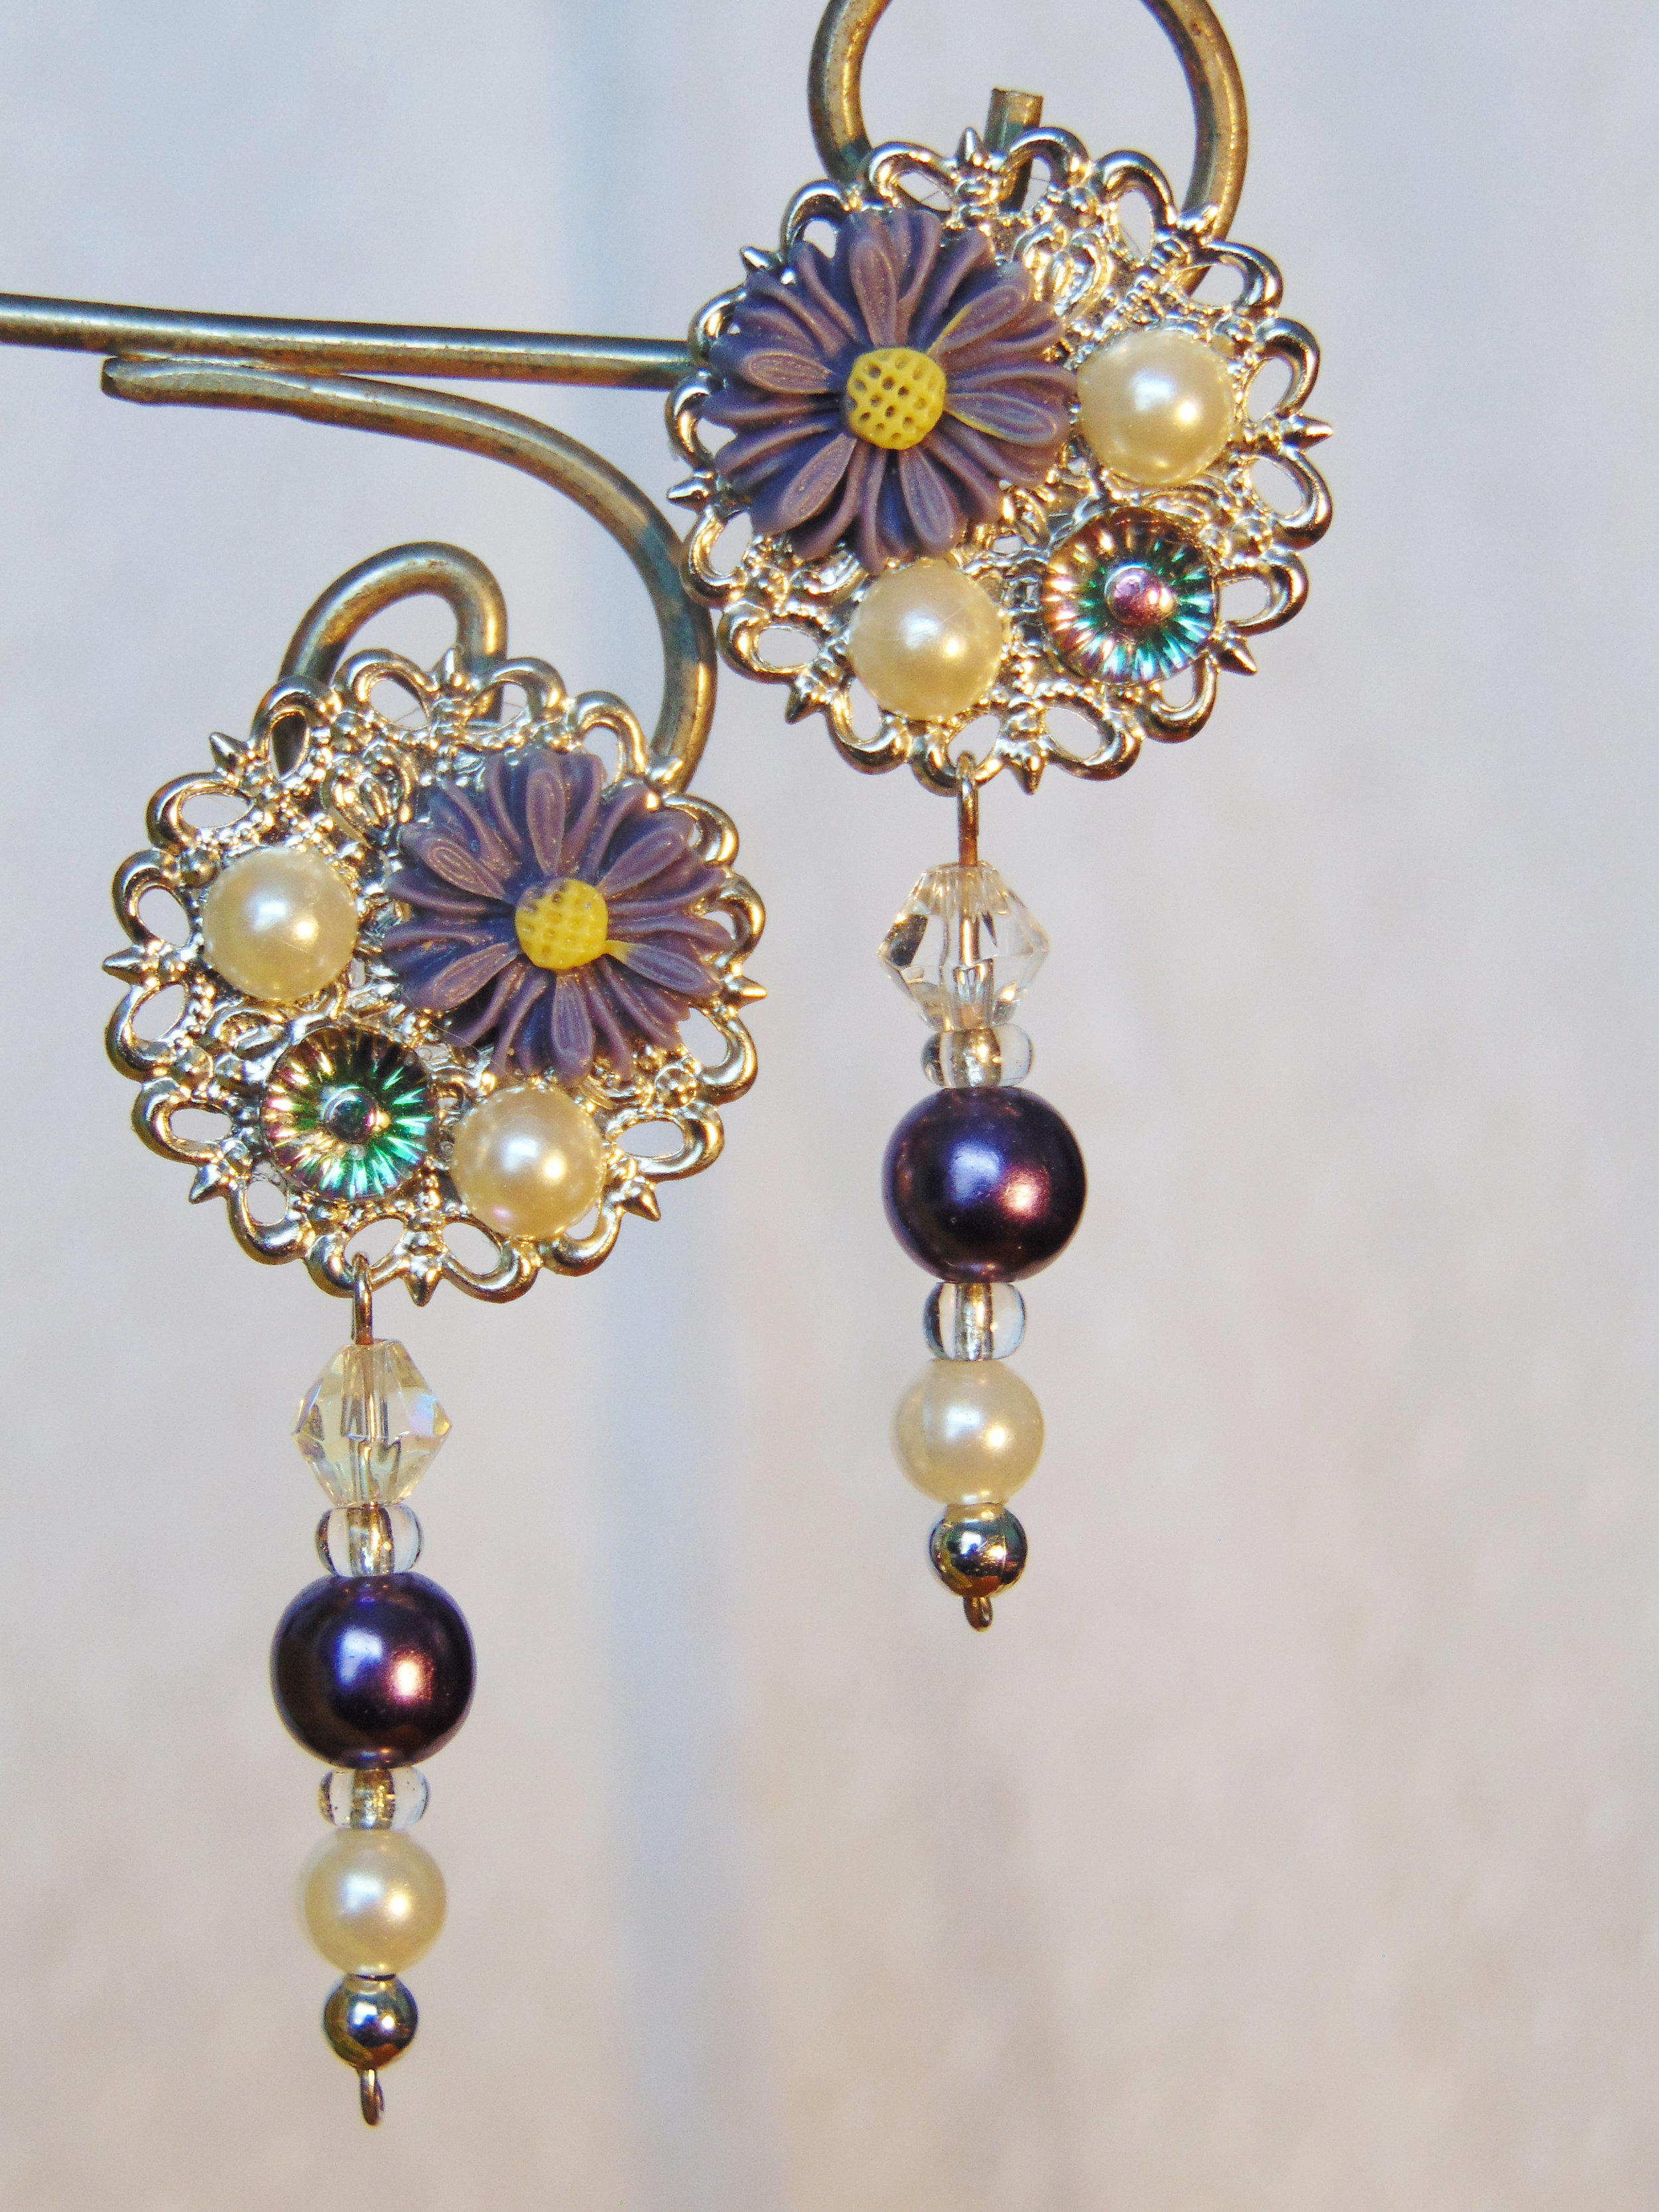 Handmade glass and bead earrings by JMB Designs